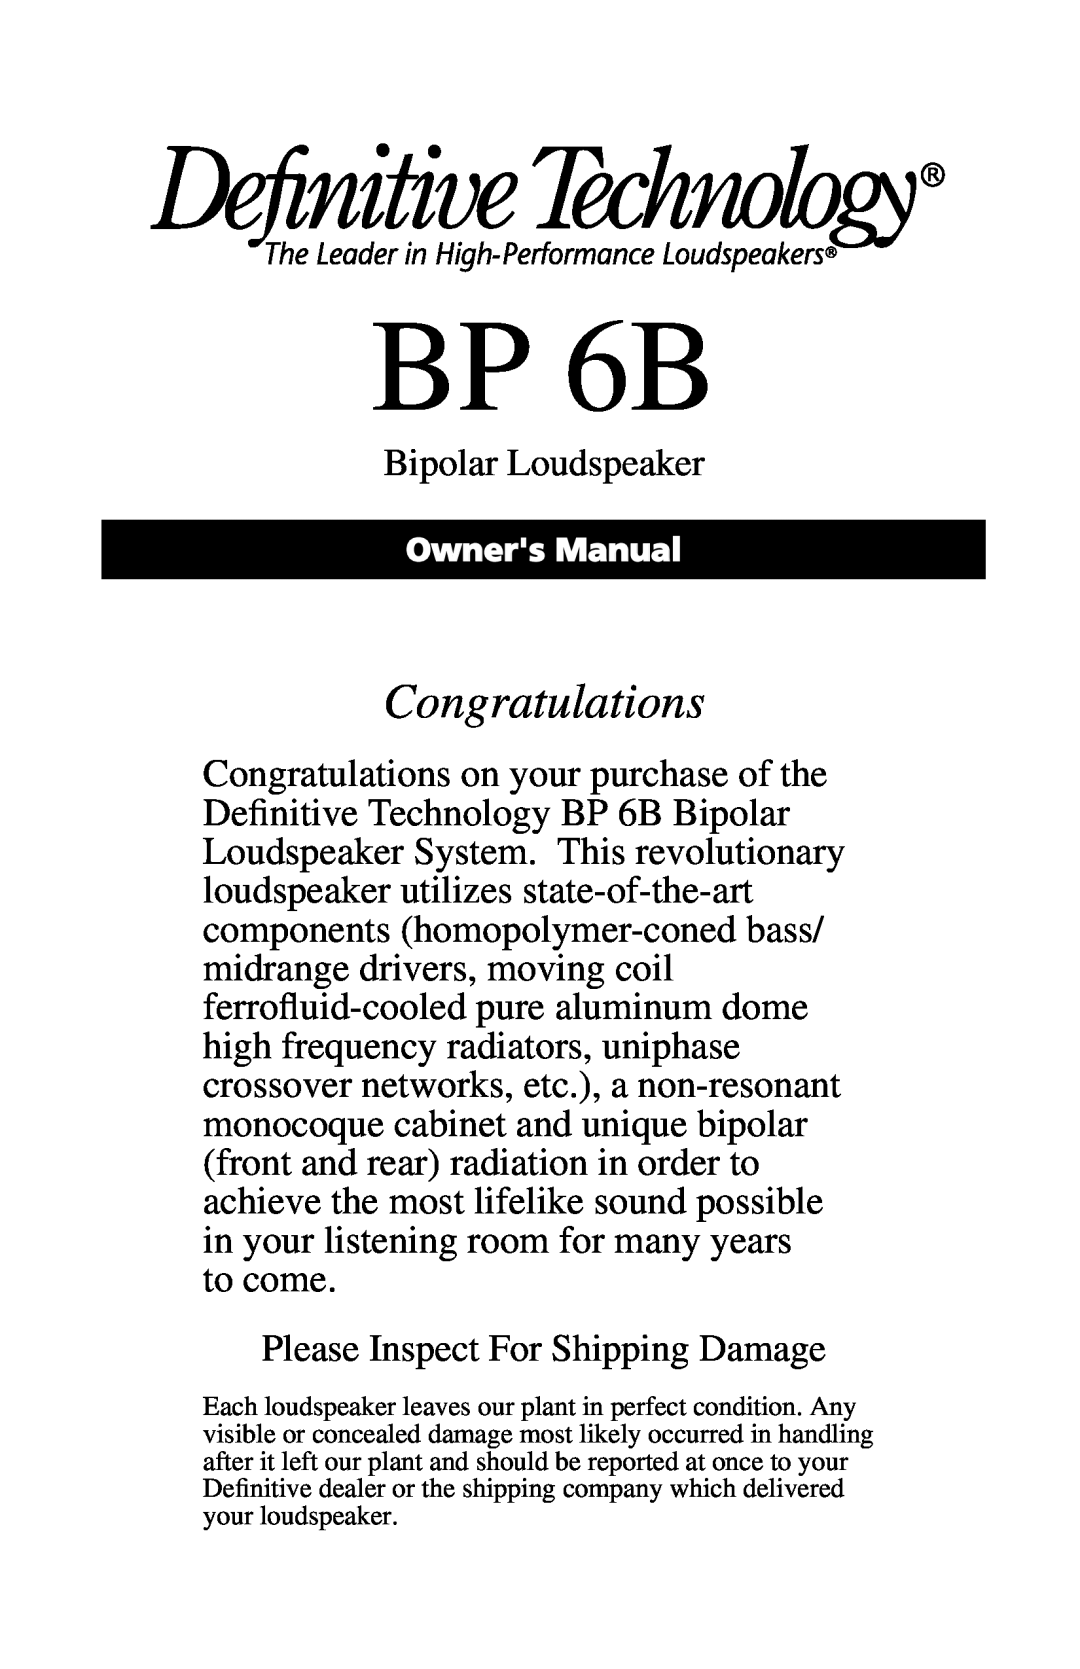 Definitive Technology BP 6B manual Congratulations 